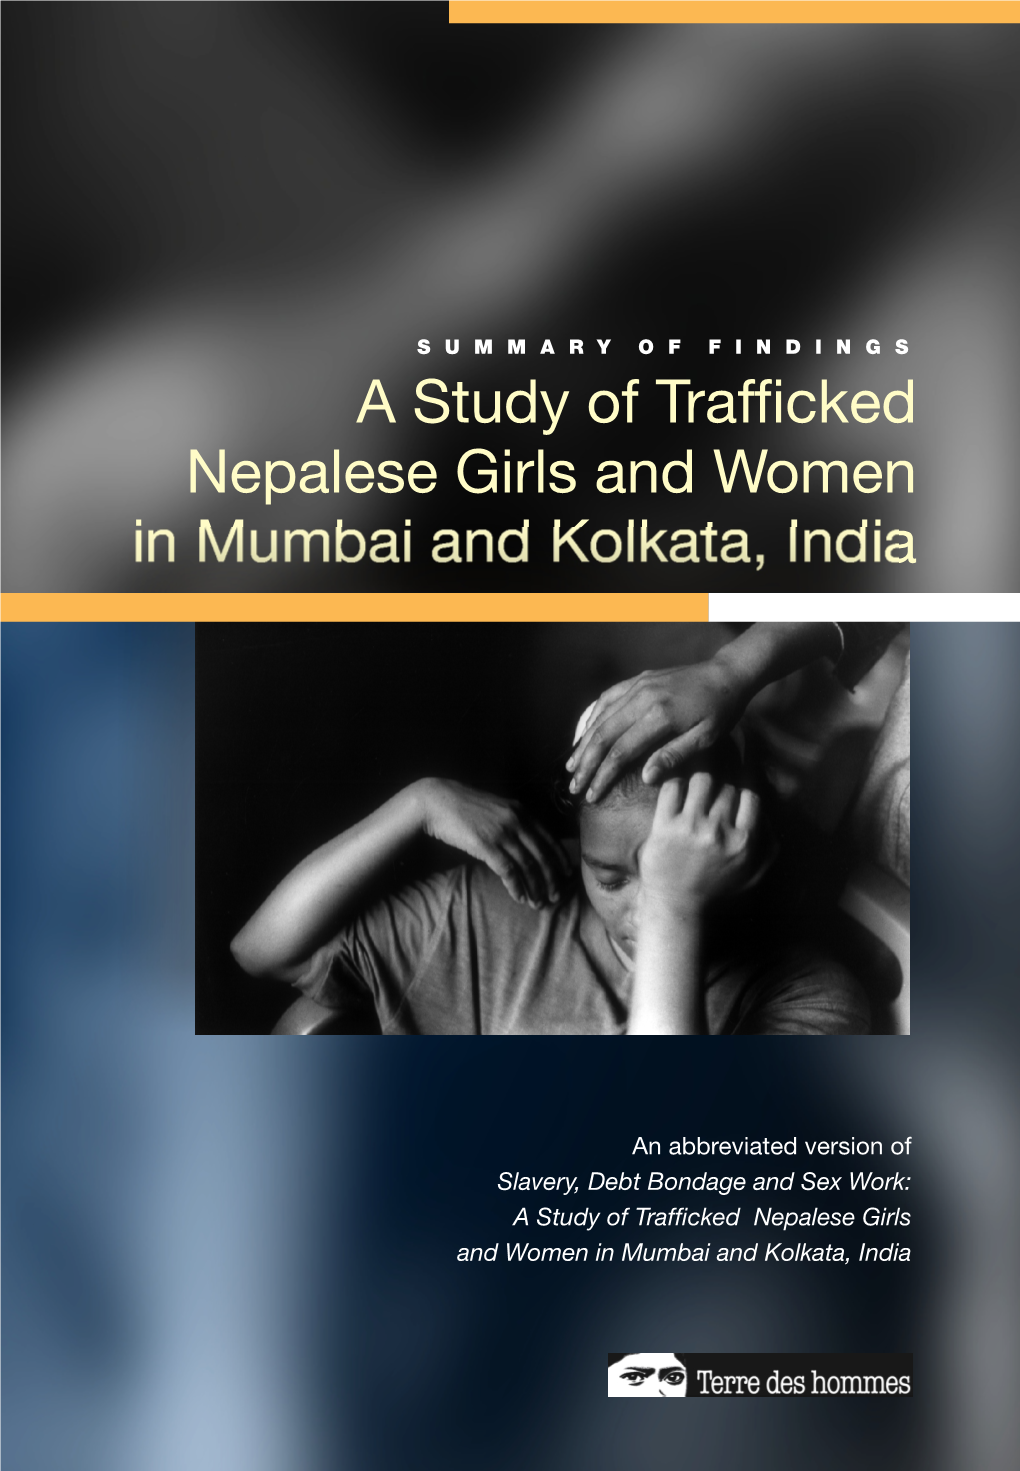 A Study of Trafficked Nepalese Girls and Women in Mumbai and Kolkata, India